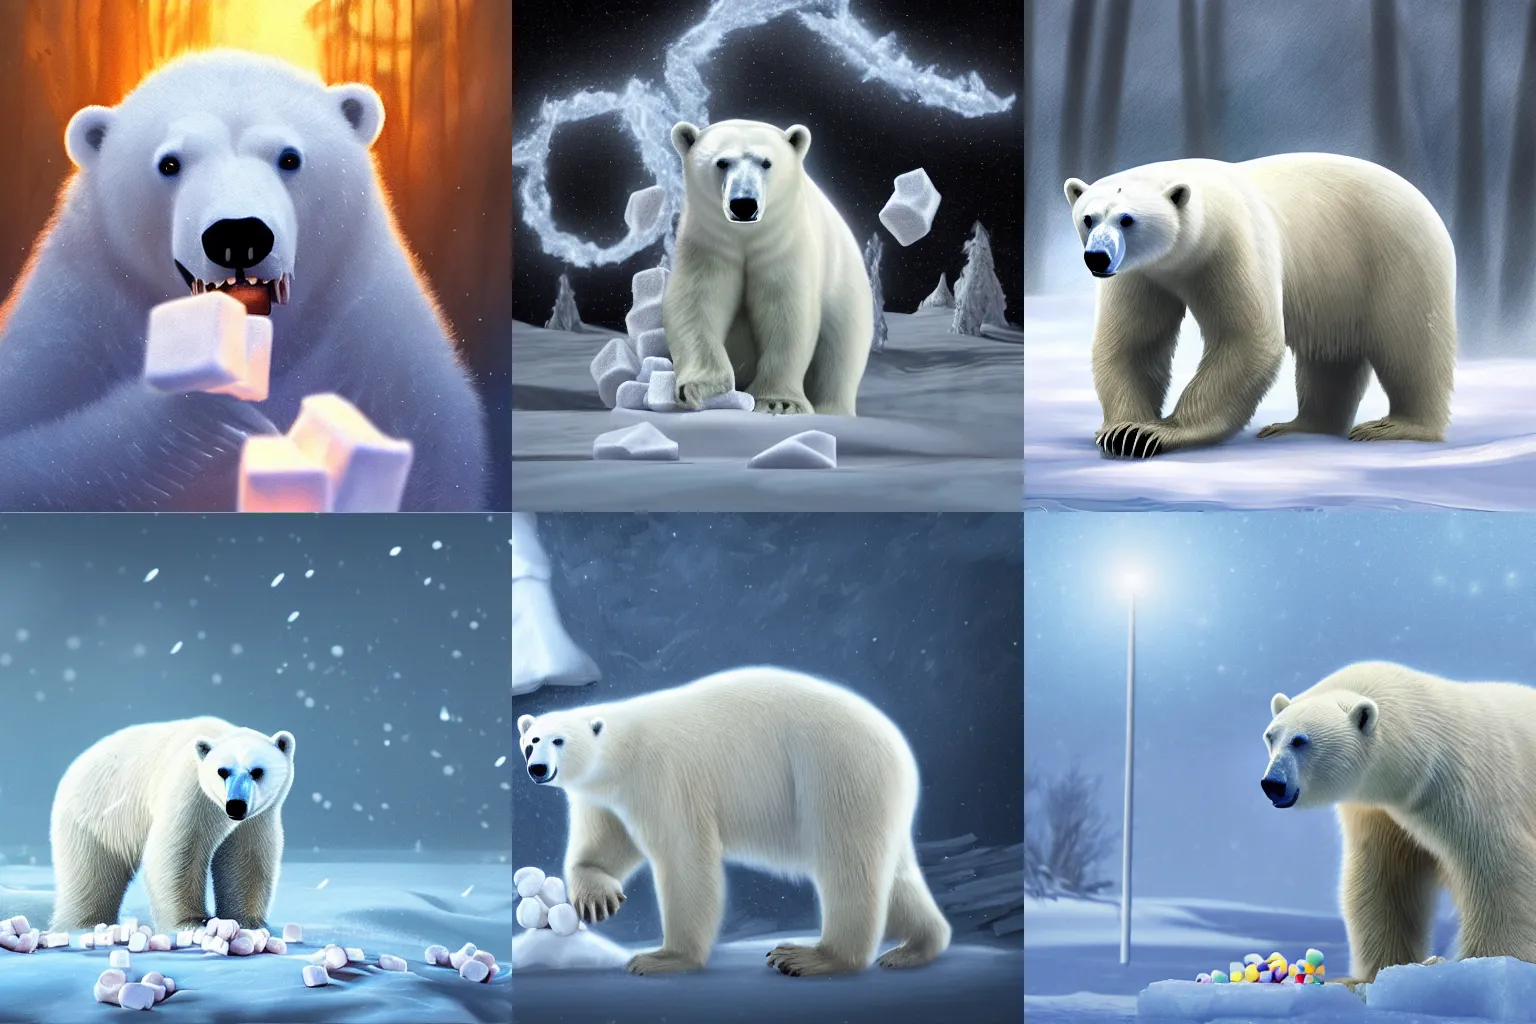 Prompt: A polar bear eating marshmallows in a blizzard. Award-winning digital art, 4k, trending on ArtStation, f/4